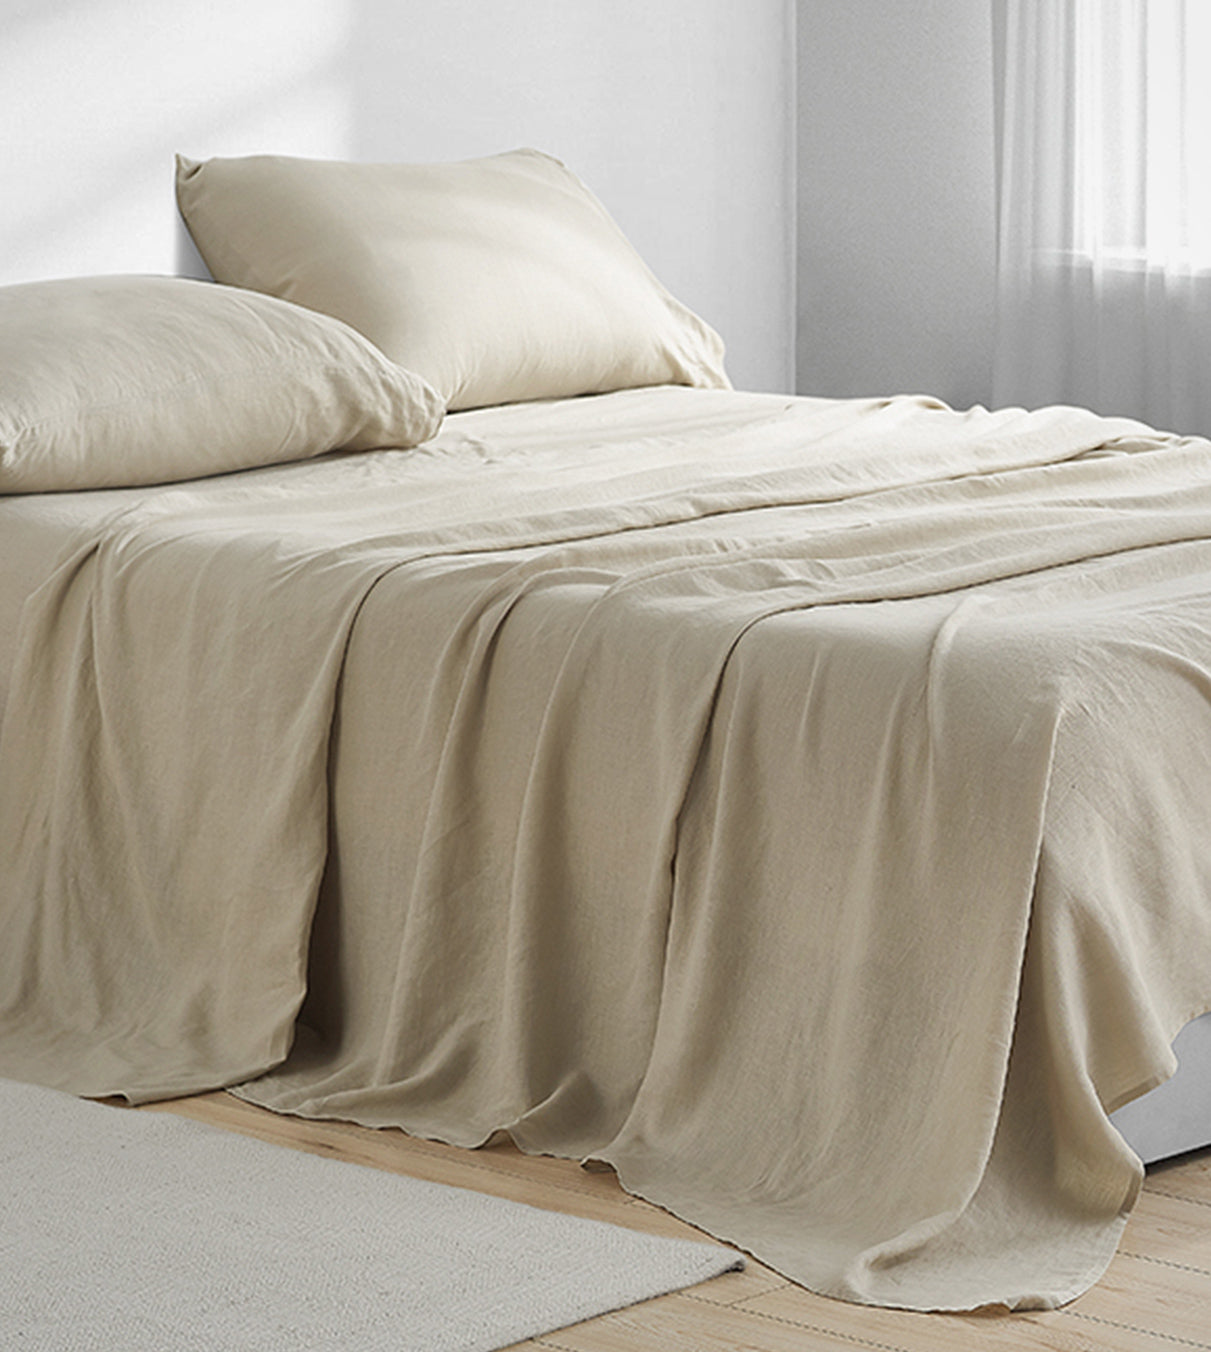 Product: French Linen Sheet Set | Color: Khaki